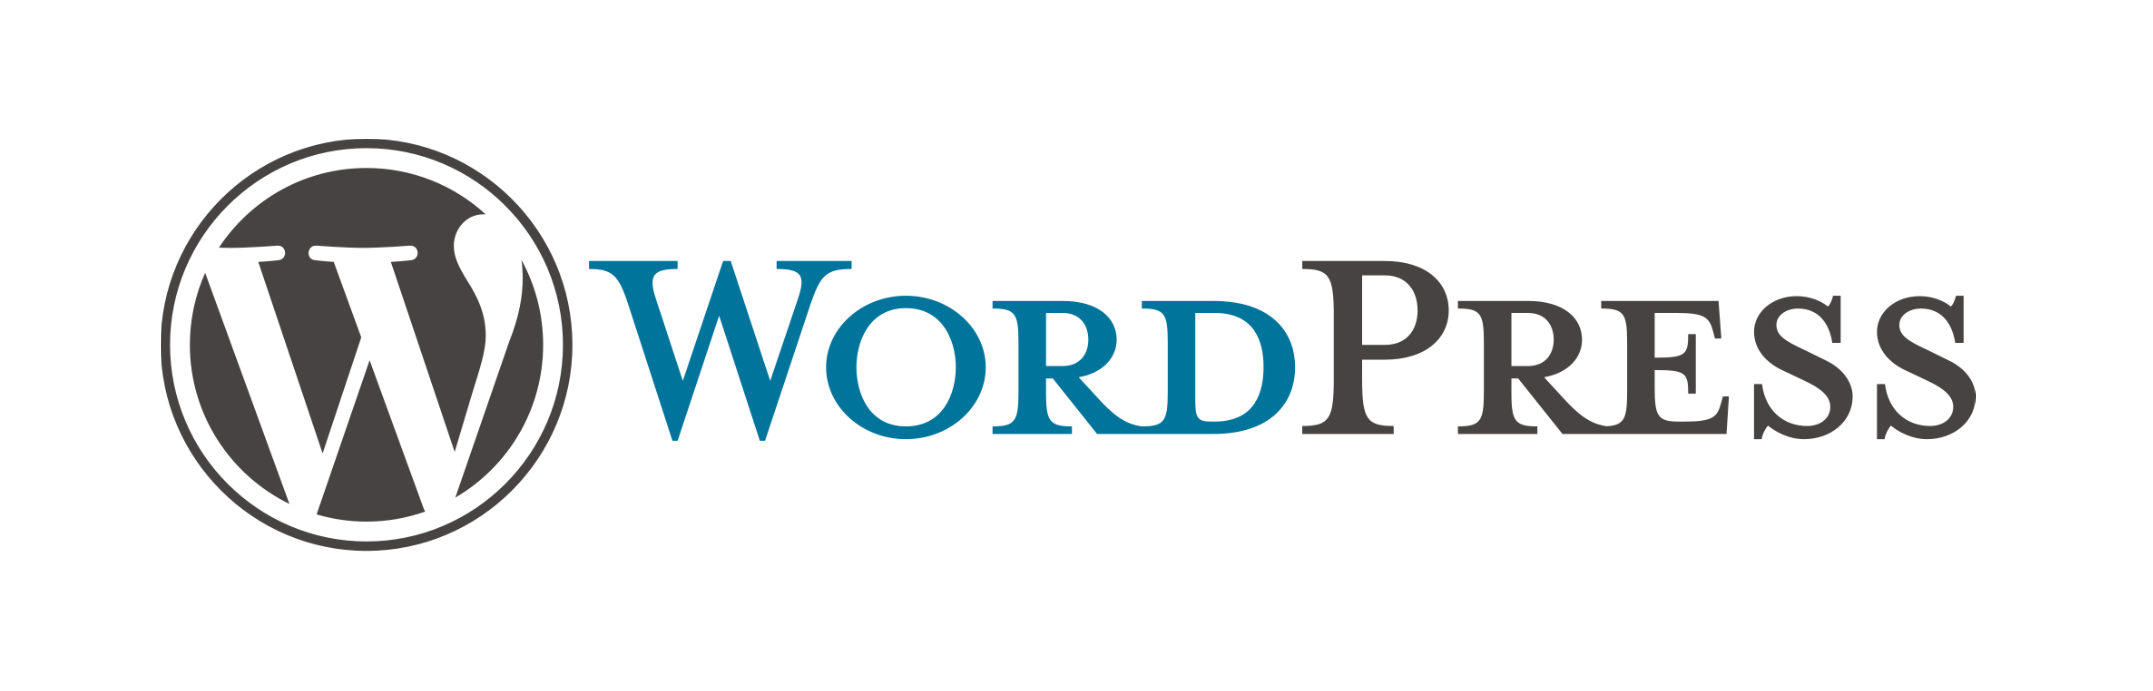 2000px-WordPress.png